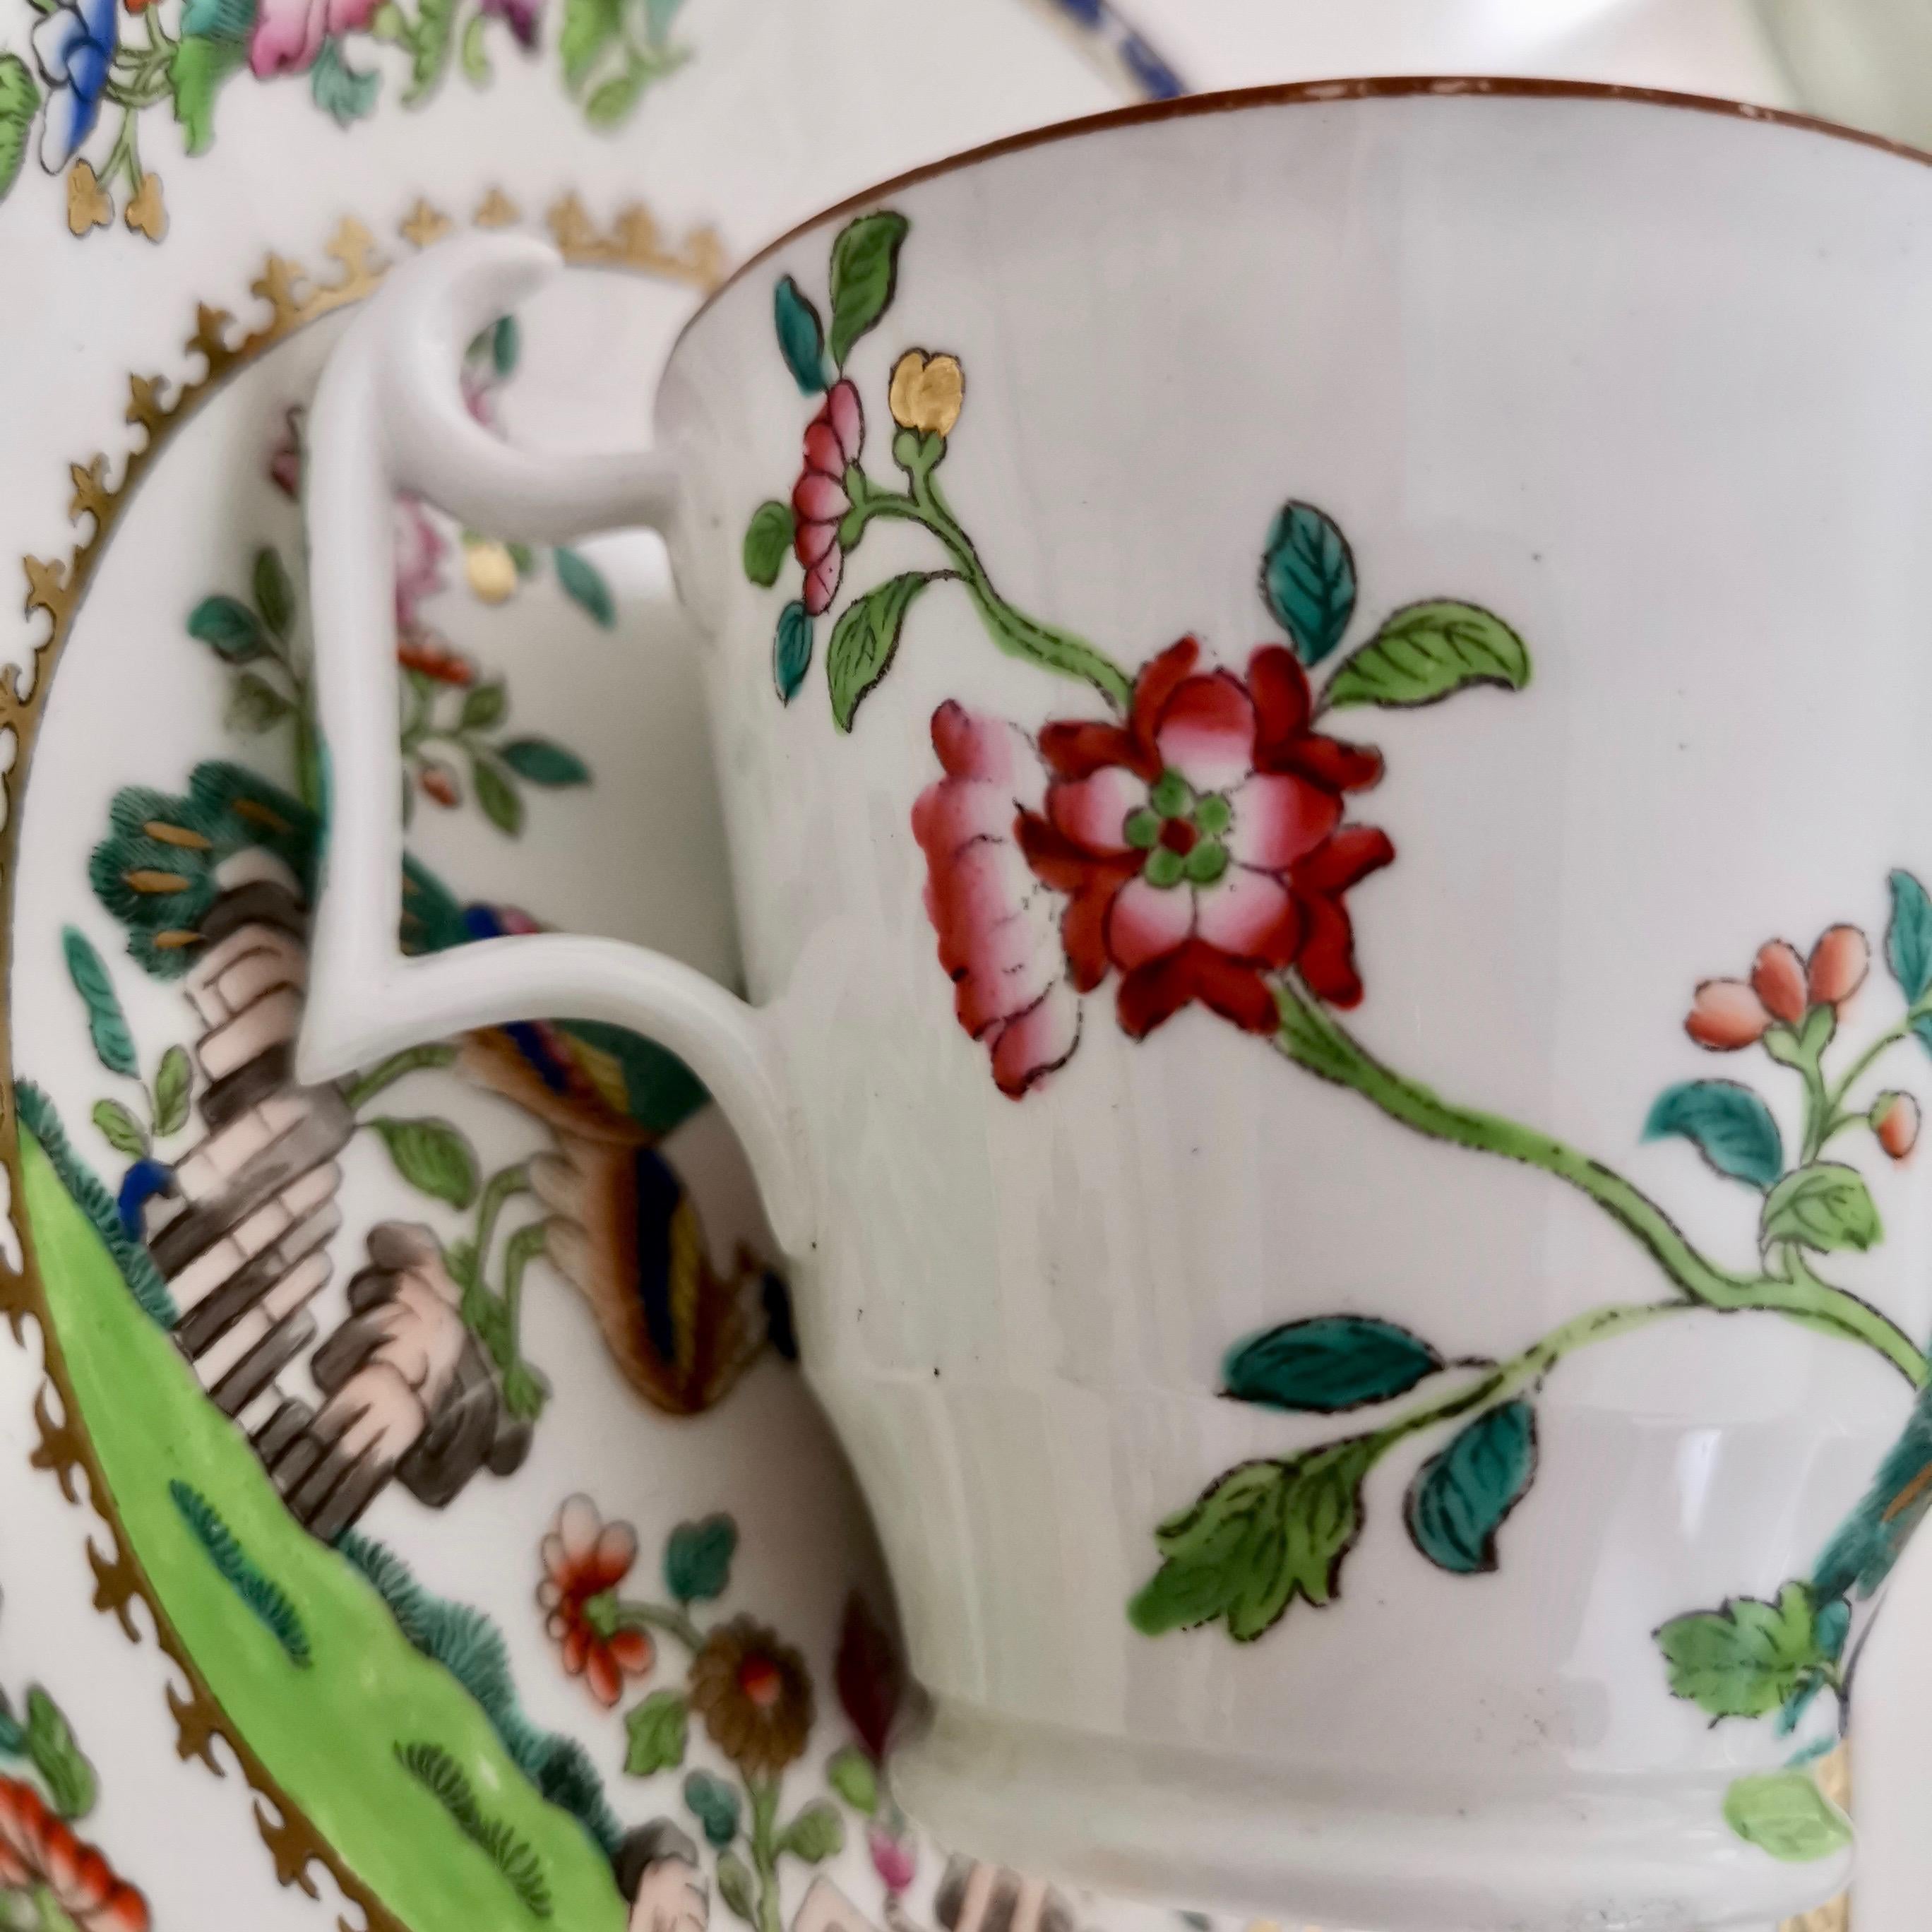 Spode Porcelain Teacup Trio, Peacock Pattern 2083, Regency, 1814-1825 7